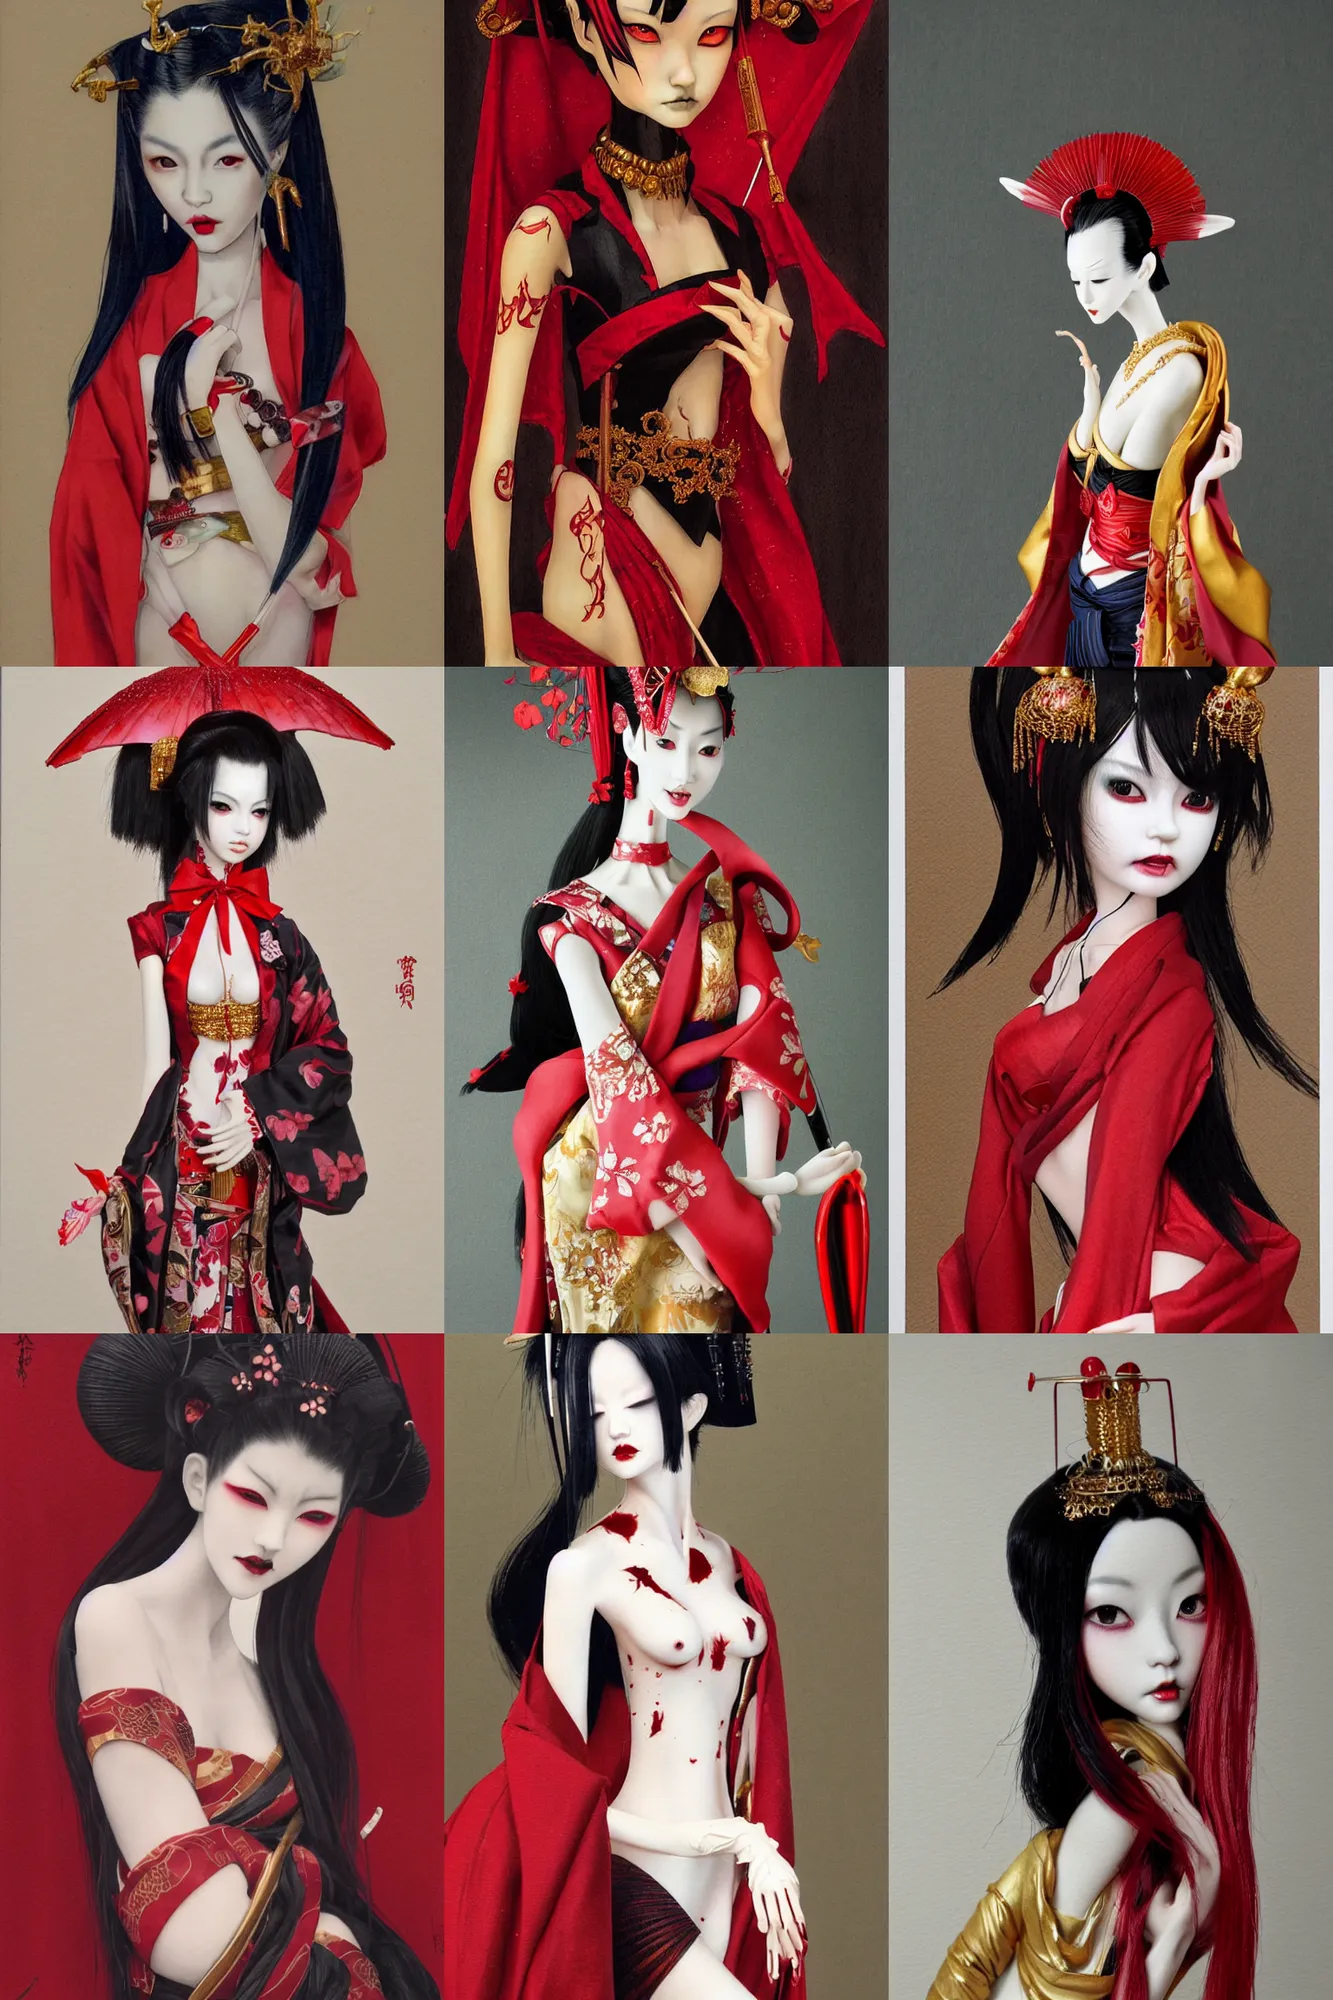 Prompt: watercolor painting of a japanese bjd geisha vampire with a long neck by hajime sorayama, irakli nadar, amy sol, dark - fantasy, red, gold, black